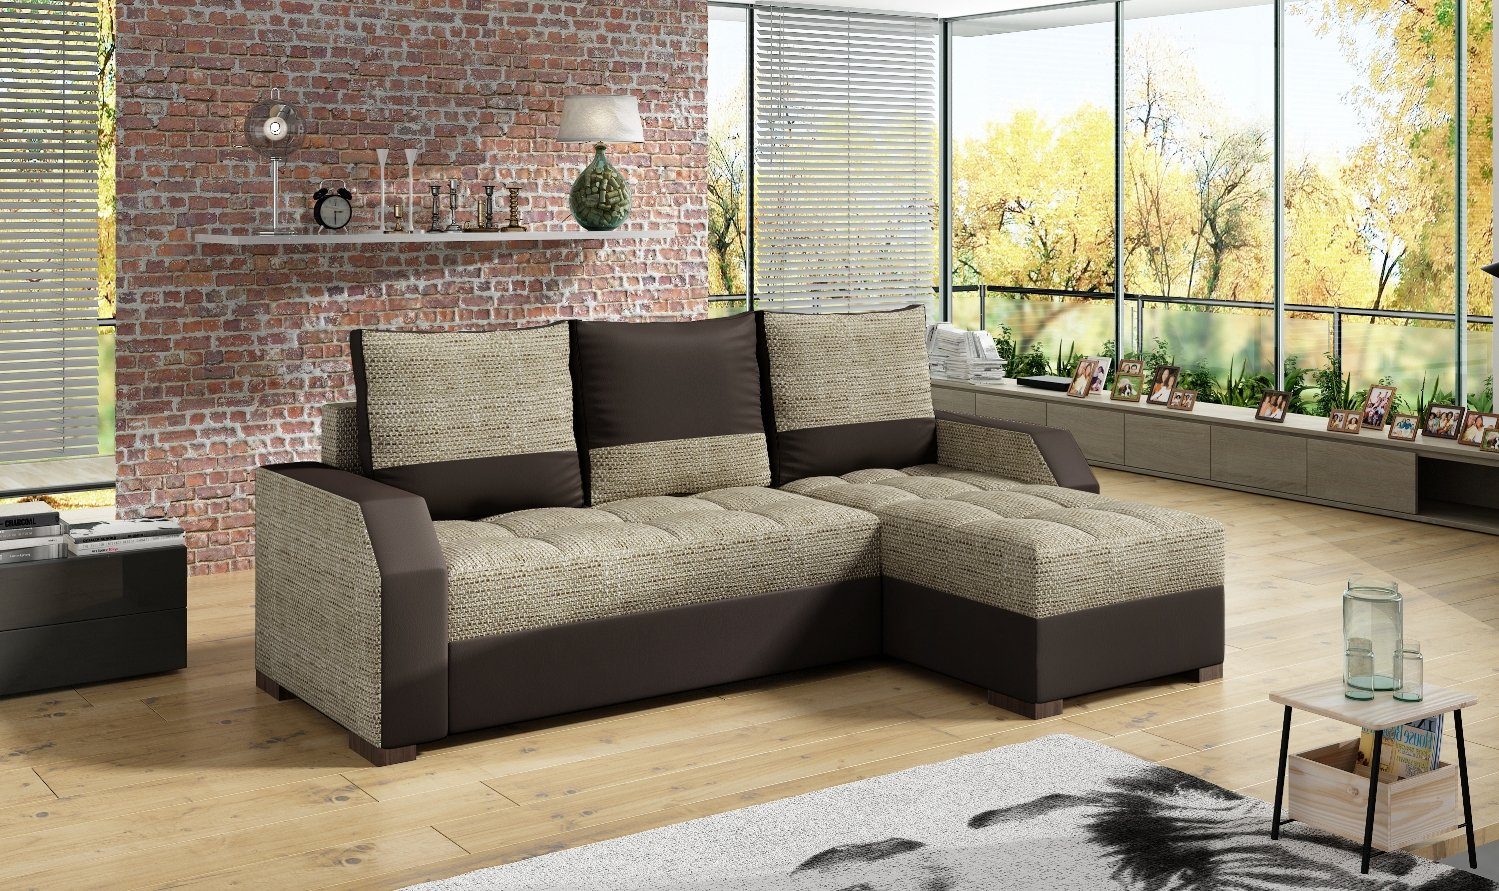 JVmoebel Ecksofa, Design Ecksofa Bettfunktion Couch Leder Textil Polster Sofas Couchen Beige / Dunkelbraun